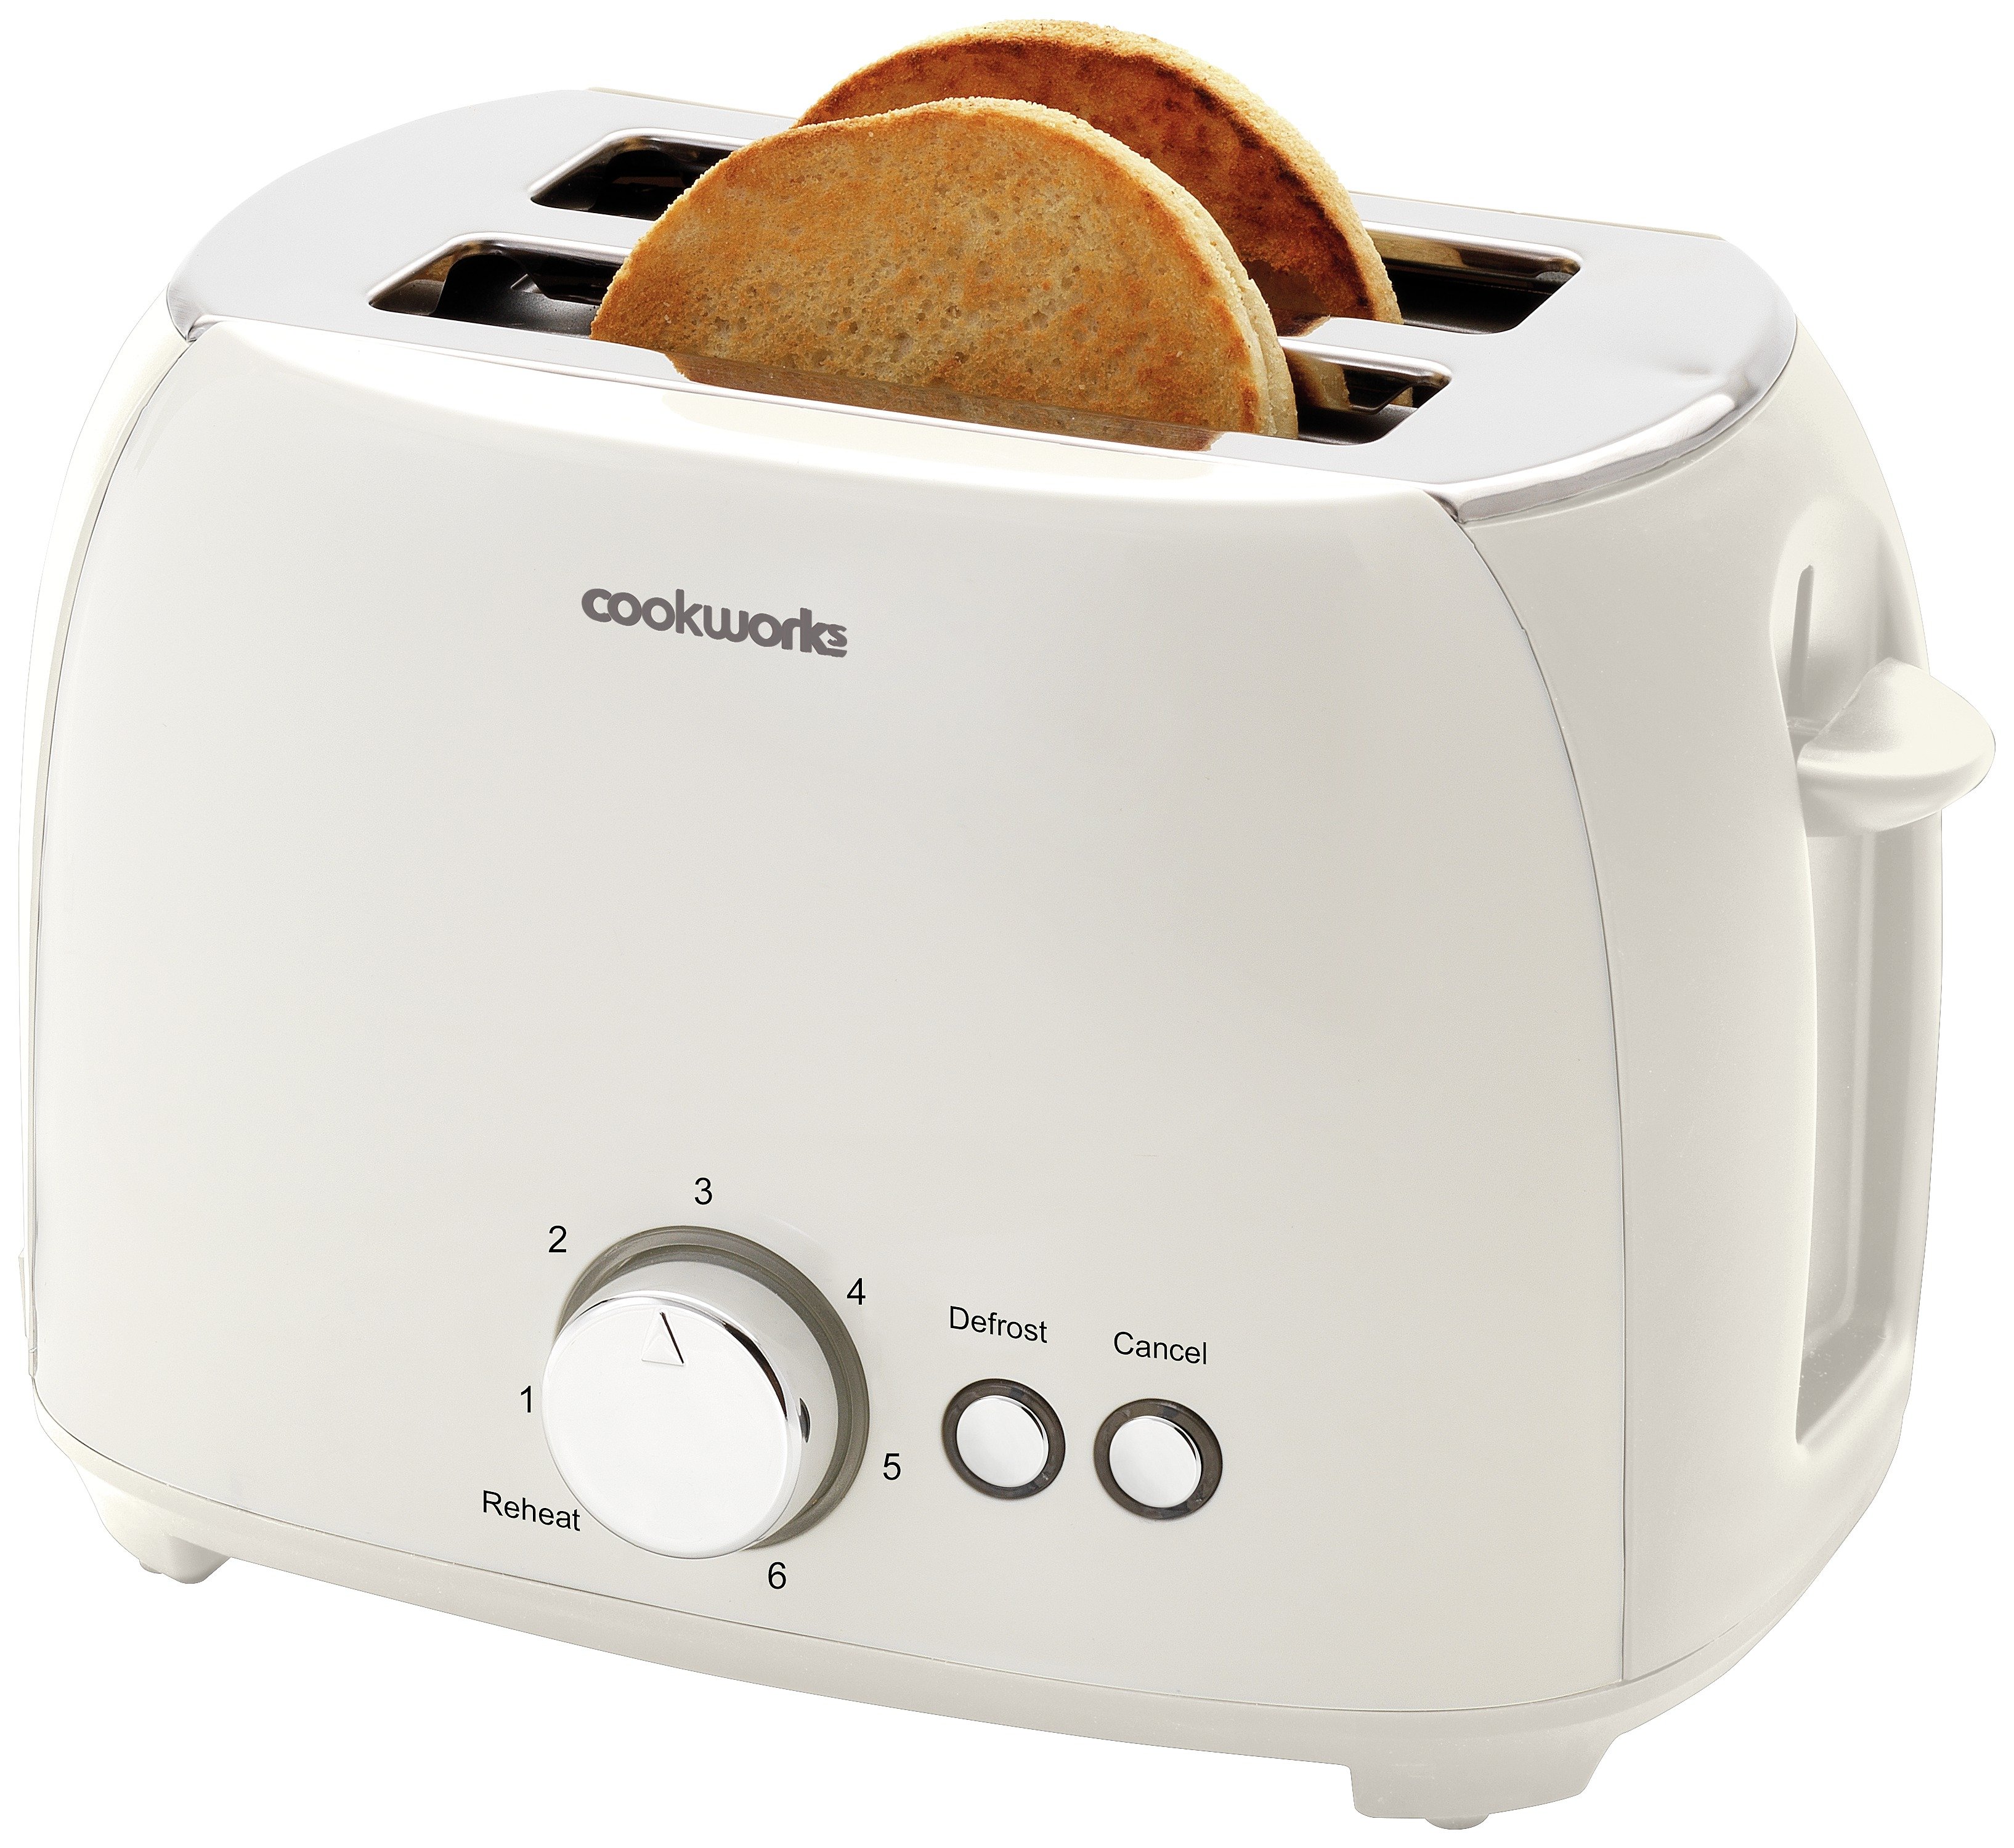 'Cookworks 2 Slice Toaster 800 Watts - White